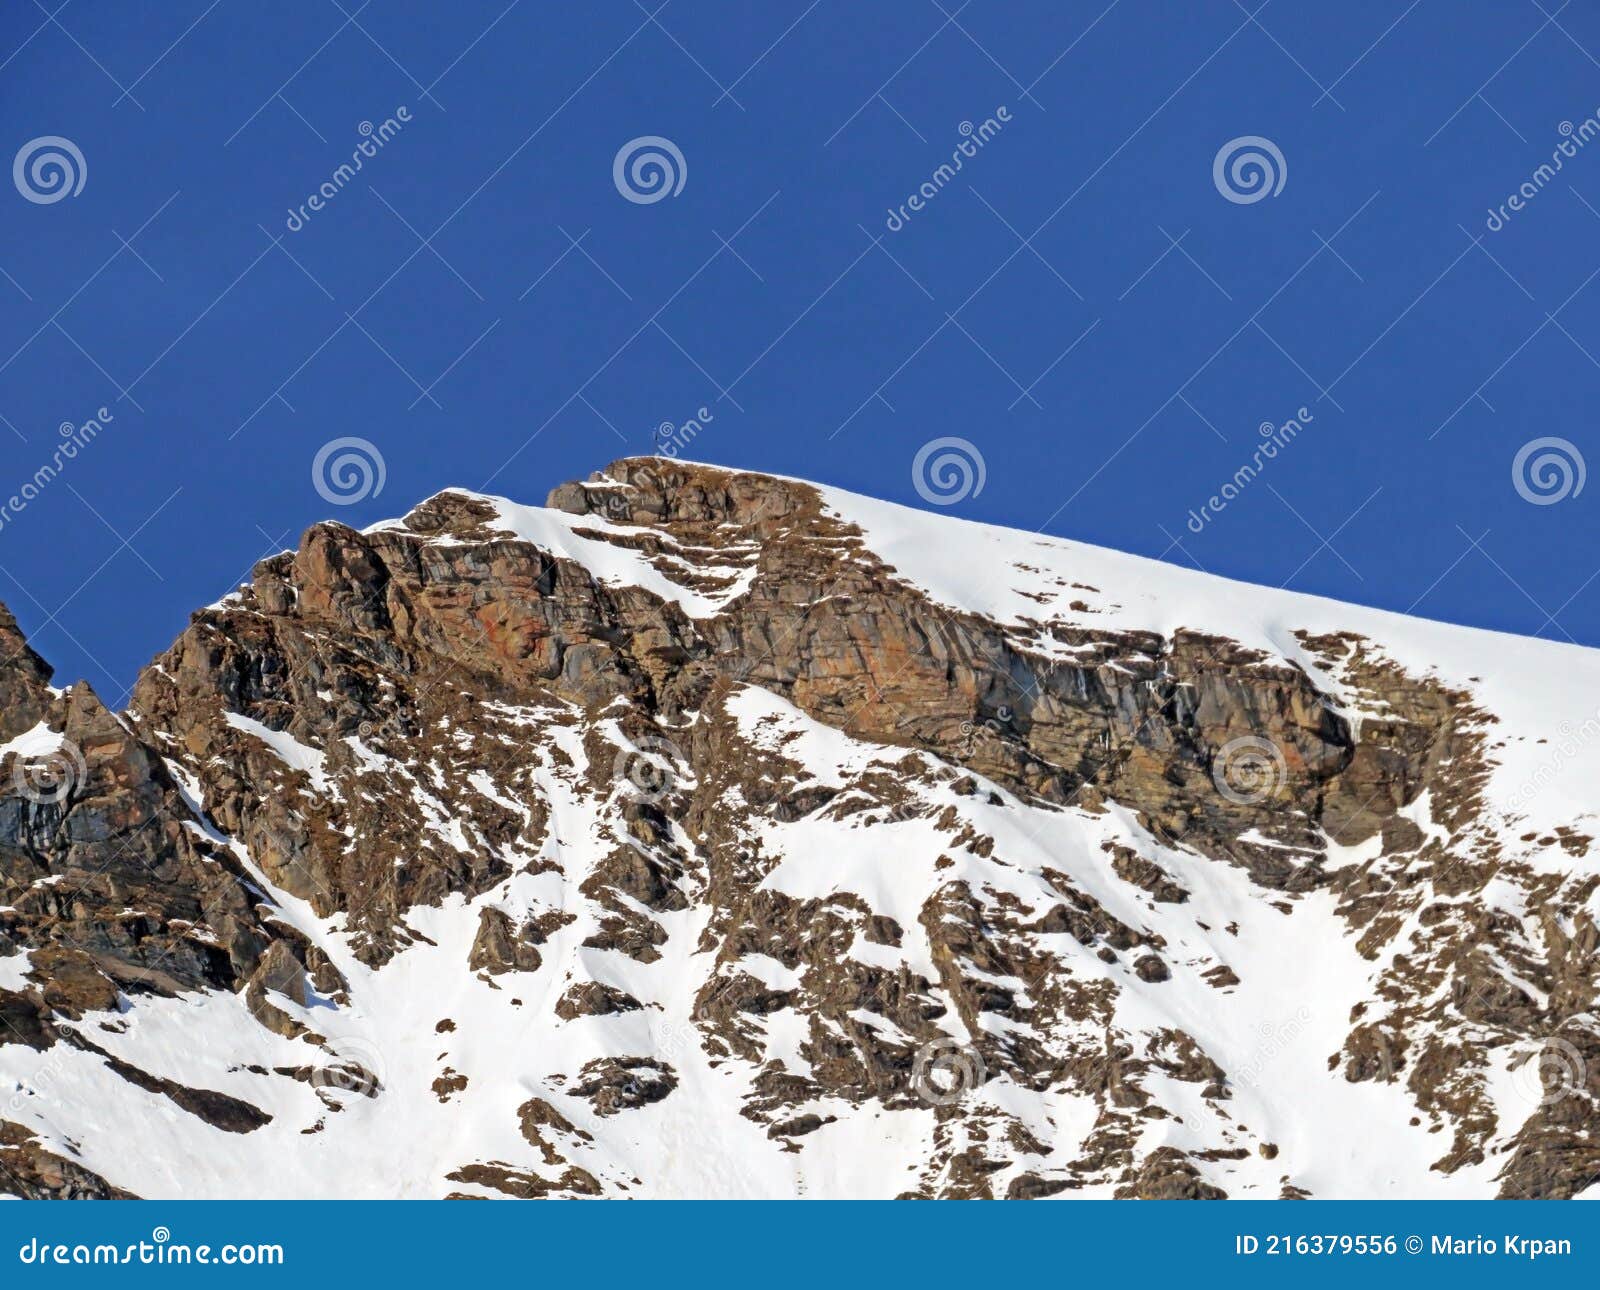 snowy alpine mountain peak la pare located in a mountain massif of the bernese alps alpes bernoises, les diablerets - suisse